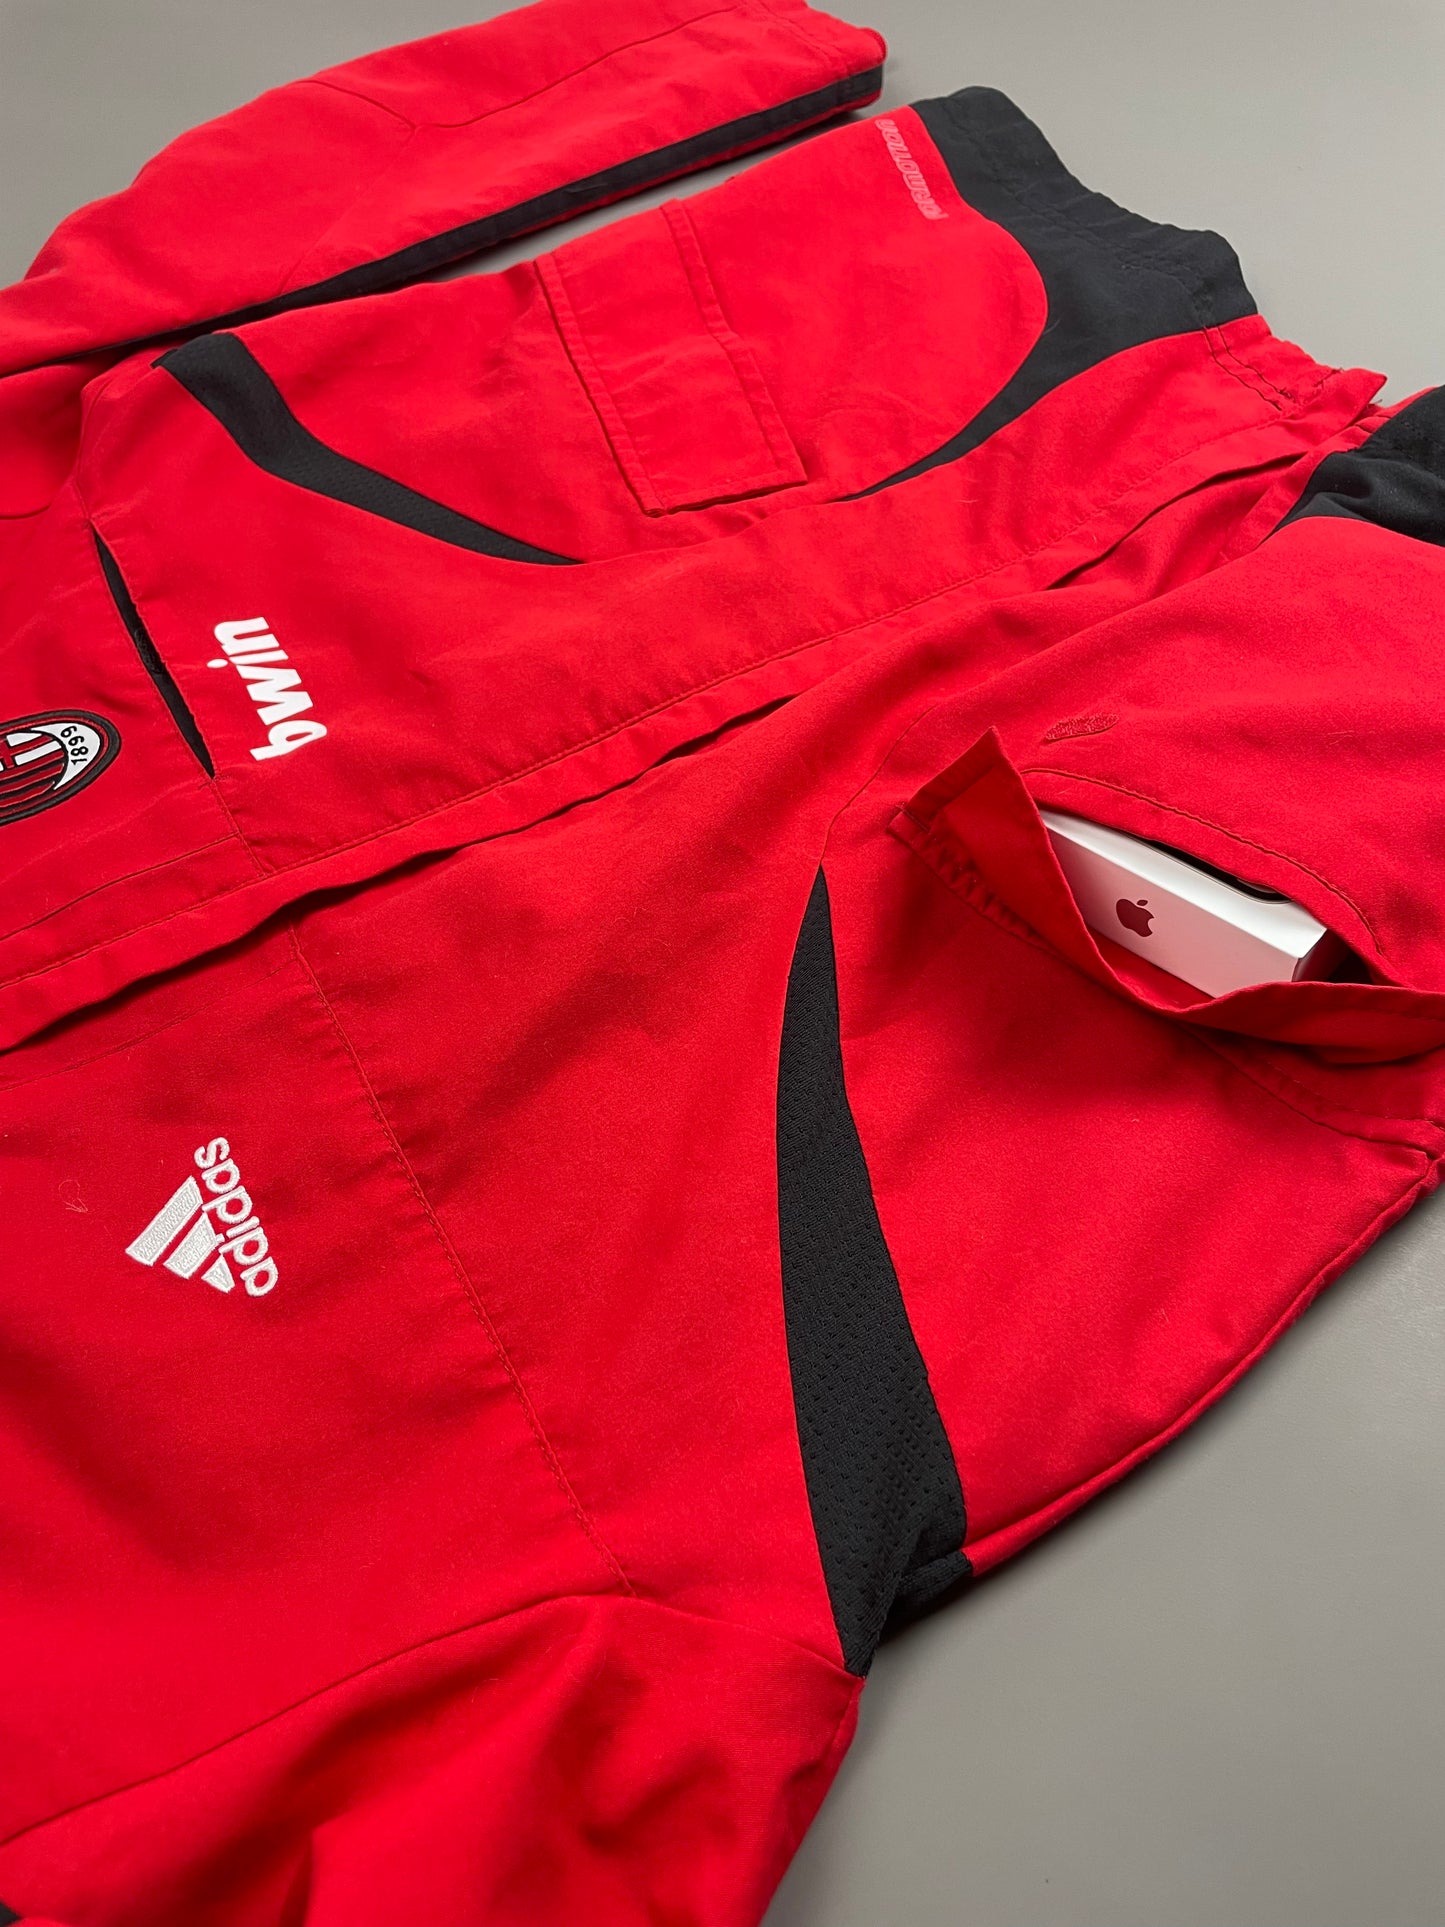 Adidas x AcMiland Trackjacket (XS)